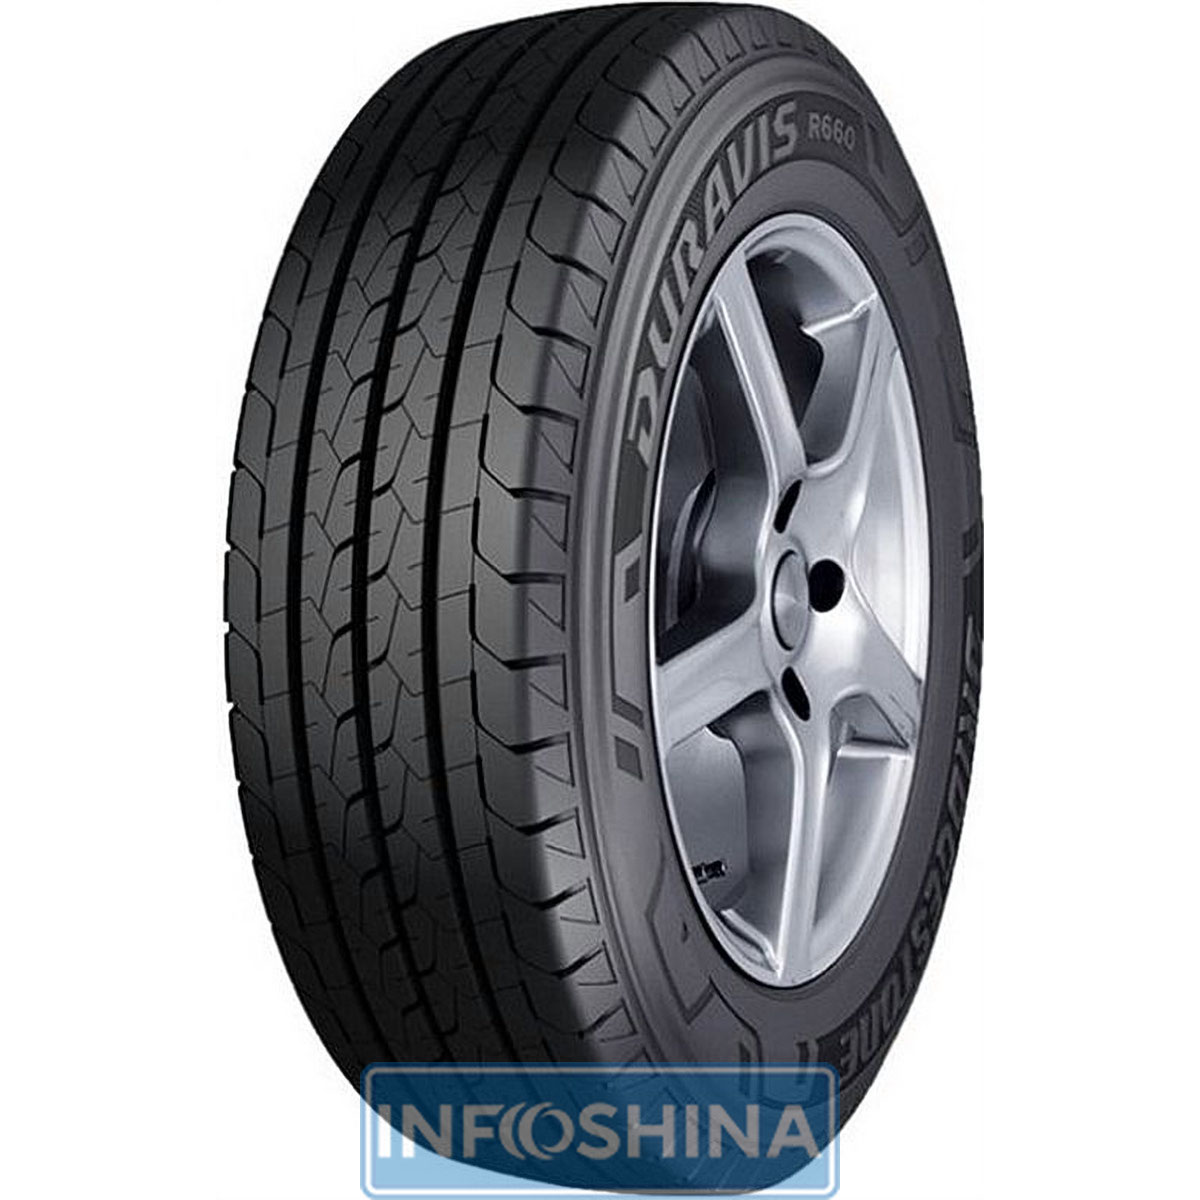 Купить шины Bridgestone Duravis R660 235/65 R16C 115/113R